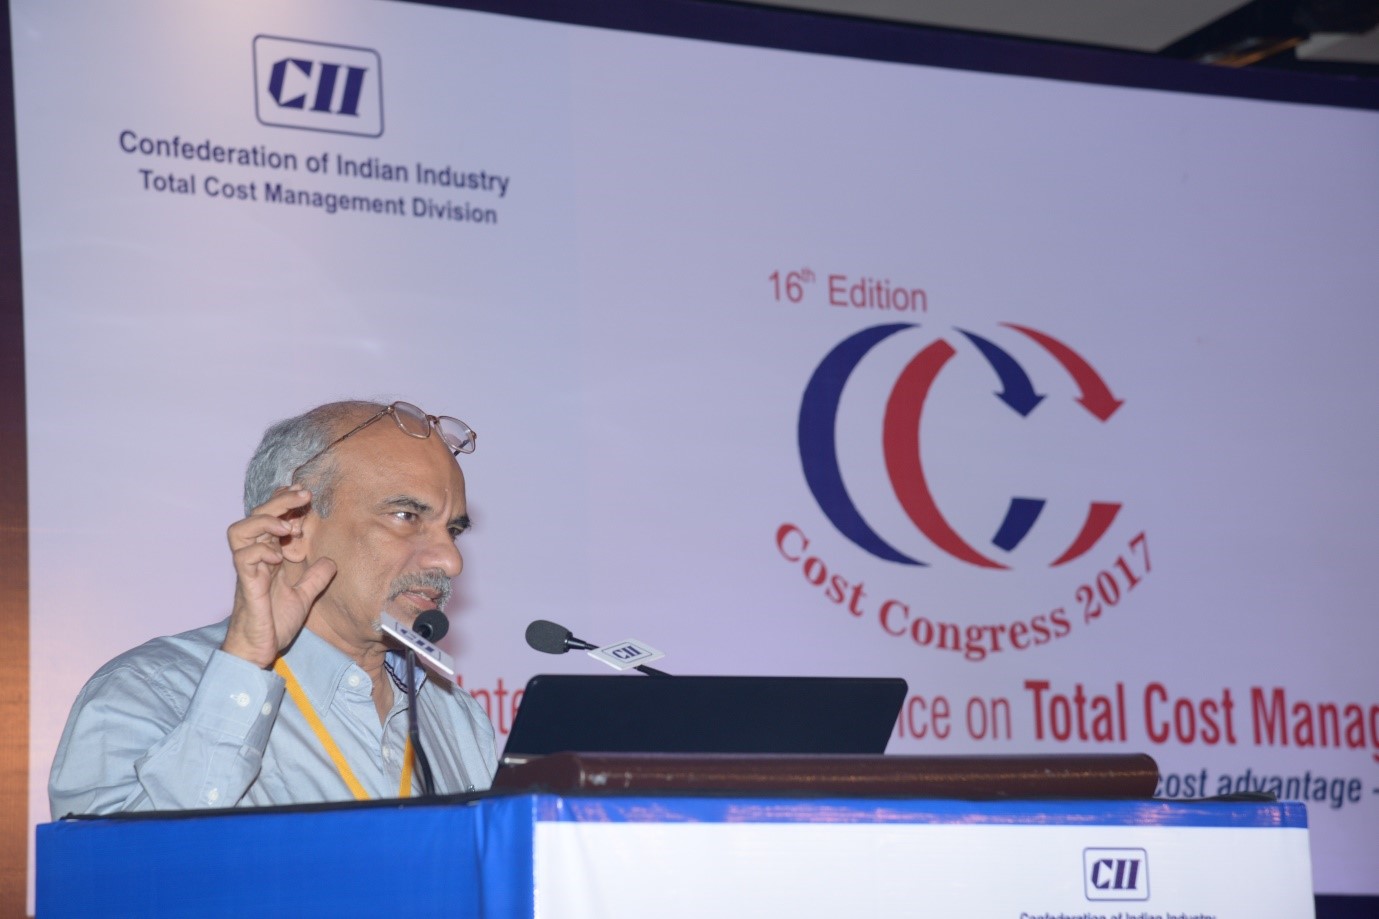 IIM Bangalore partners with CII to develop TCM Framework Document